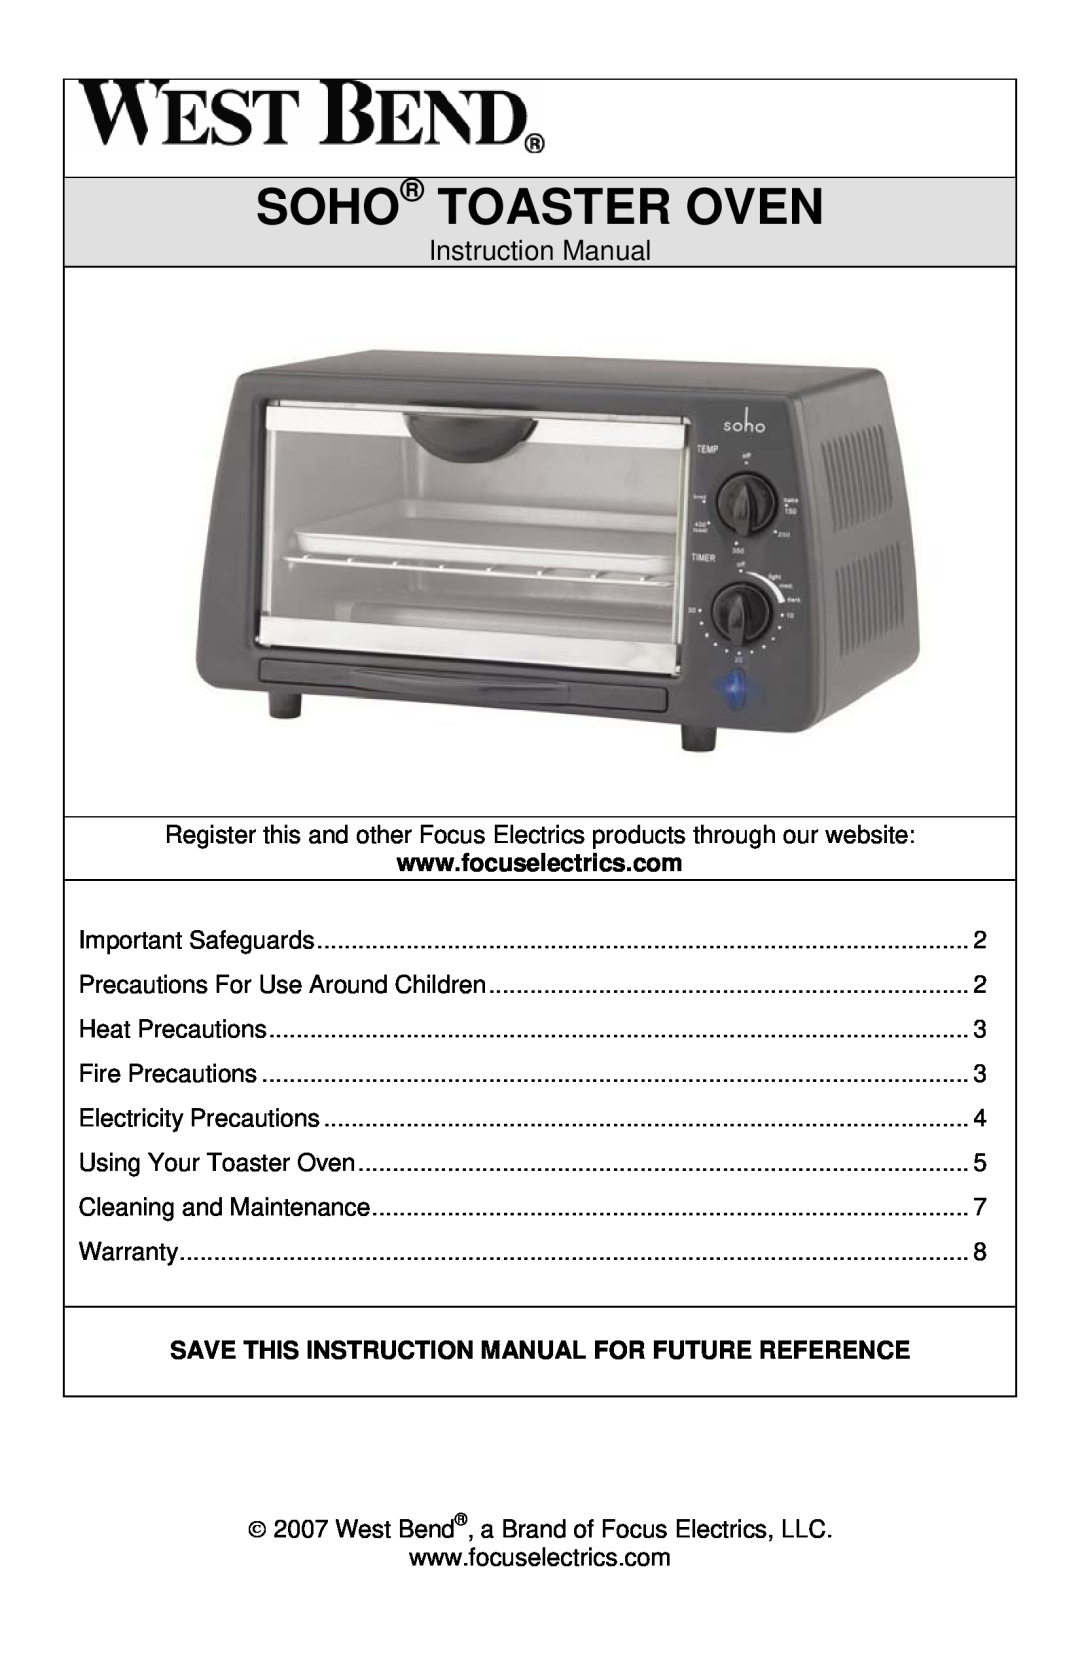 West Bend L5704, SHTO100 instruction manual Soho Toaster Oven 